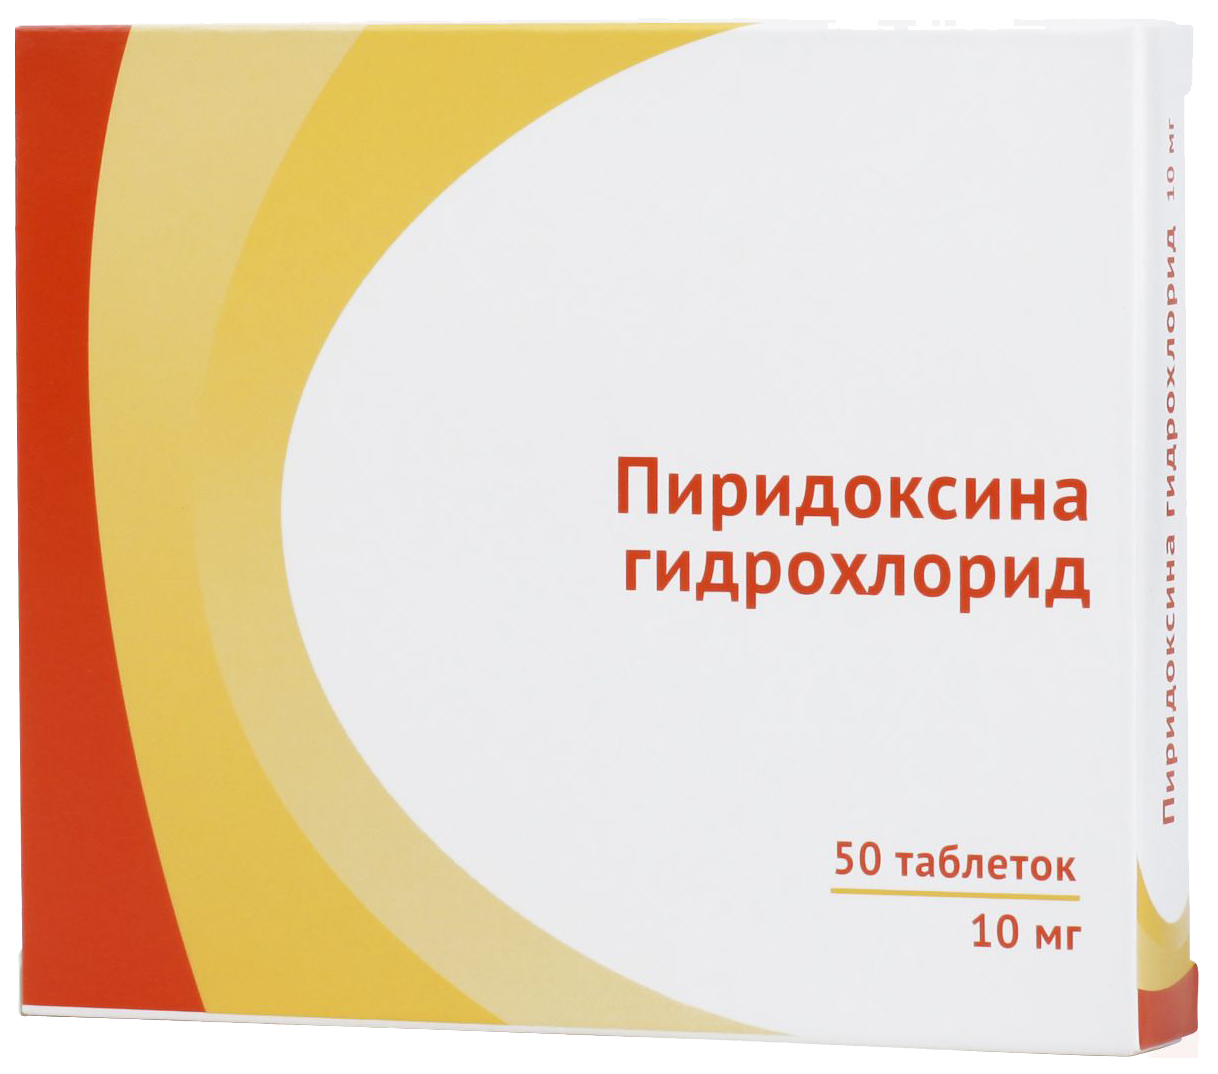 Купить Пиридоксина гидрохлорид таблетки 10 мг 50 шт., Озон ООО